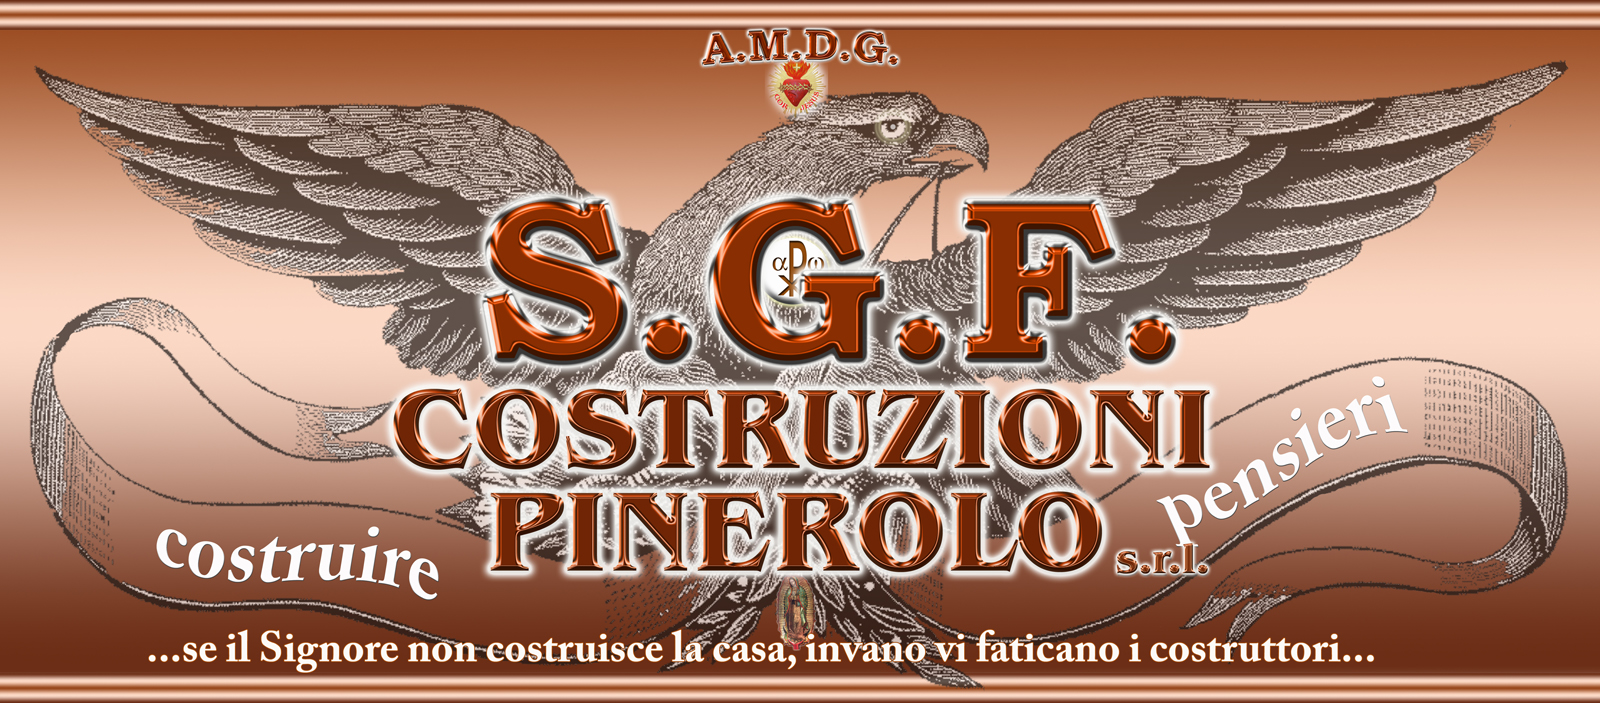 www.sgfcostruzioni.com